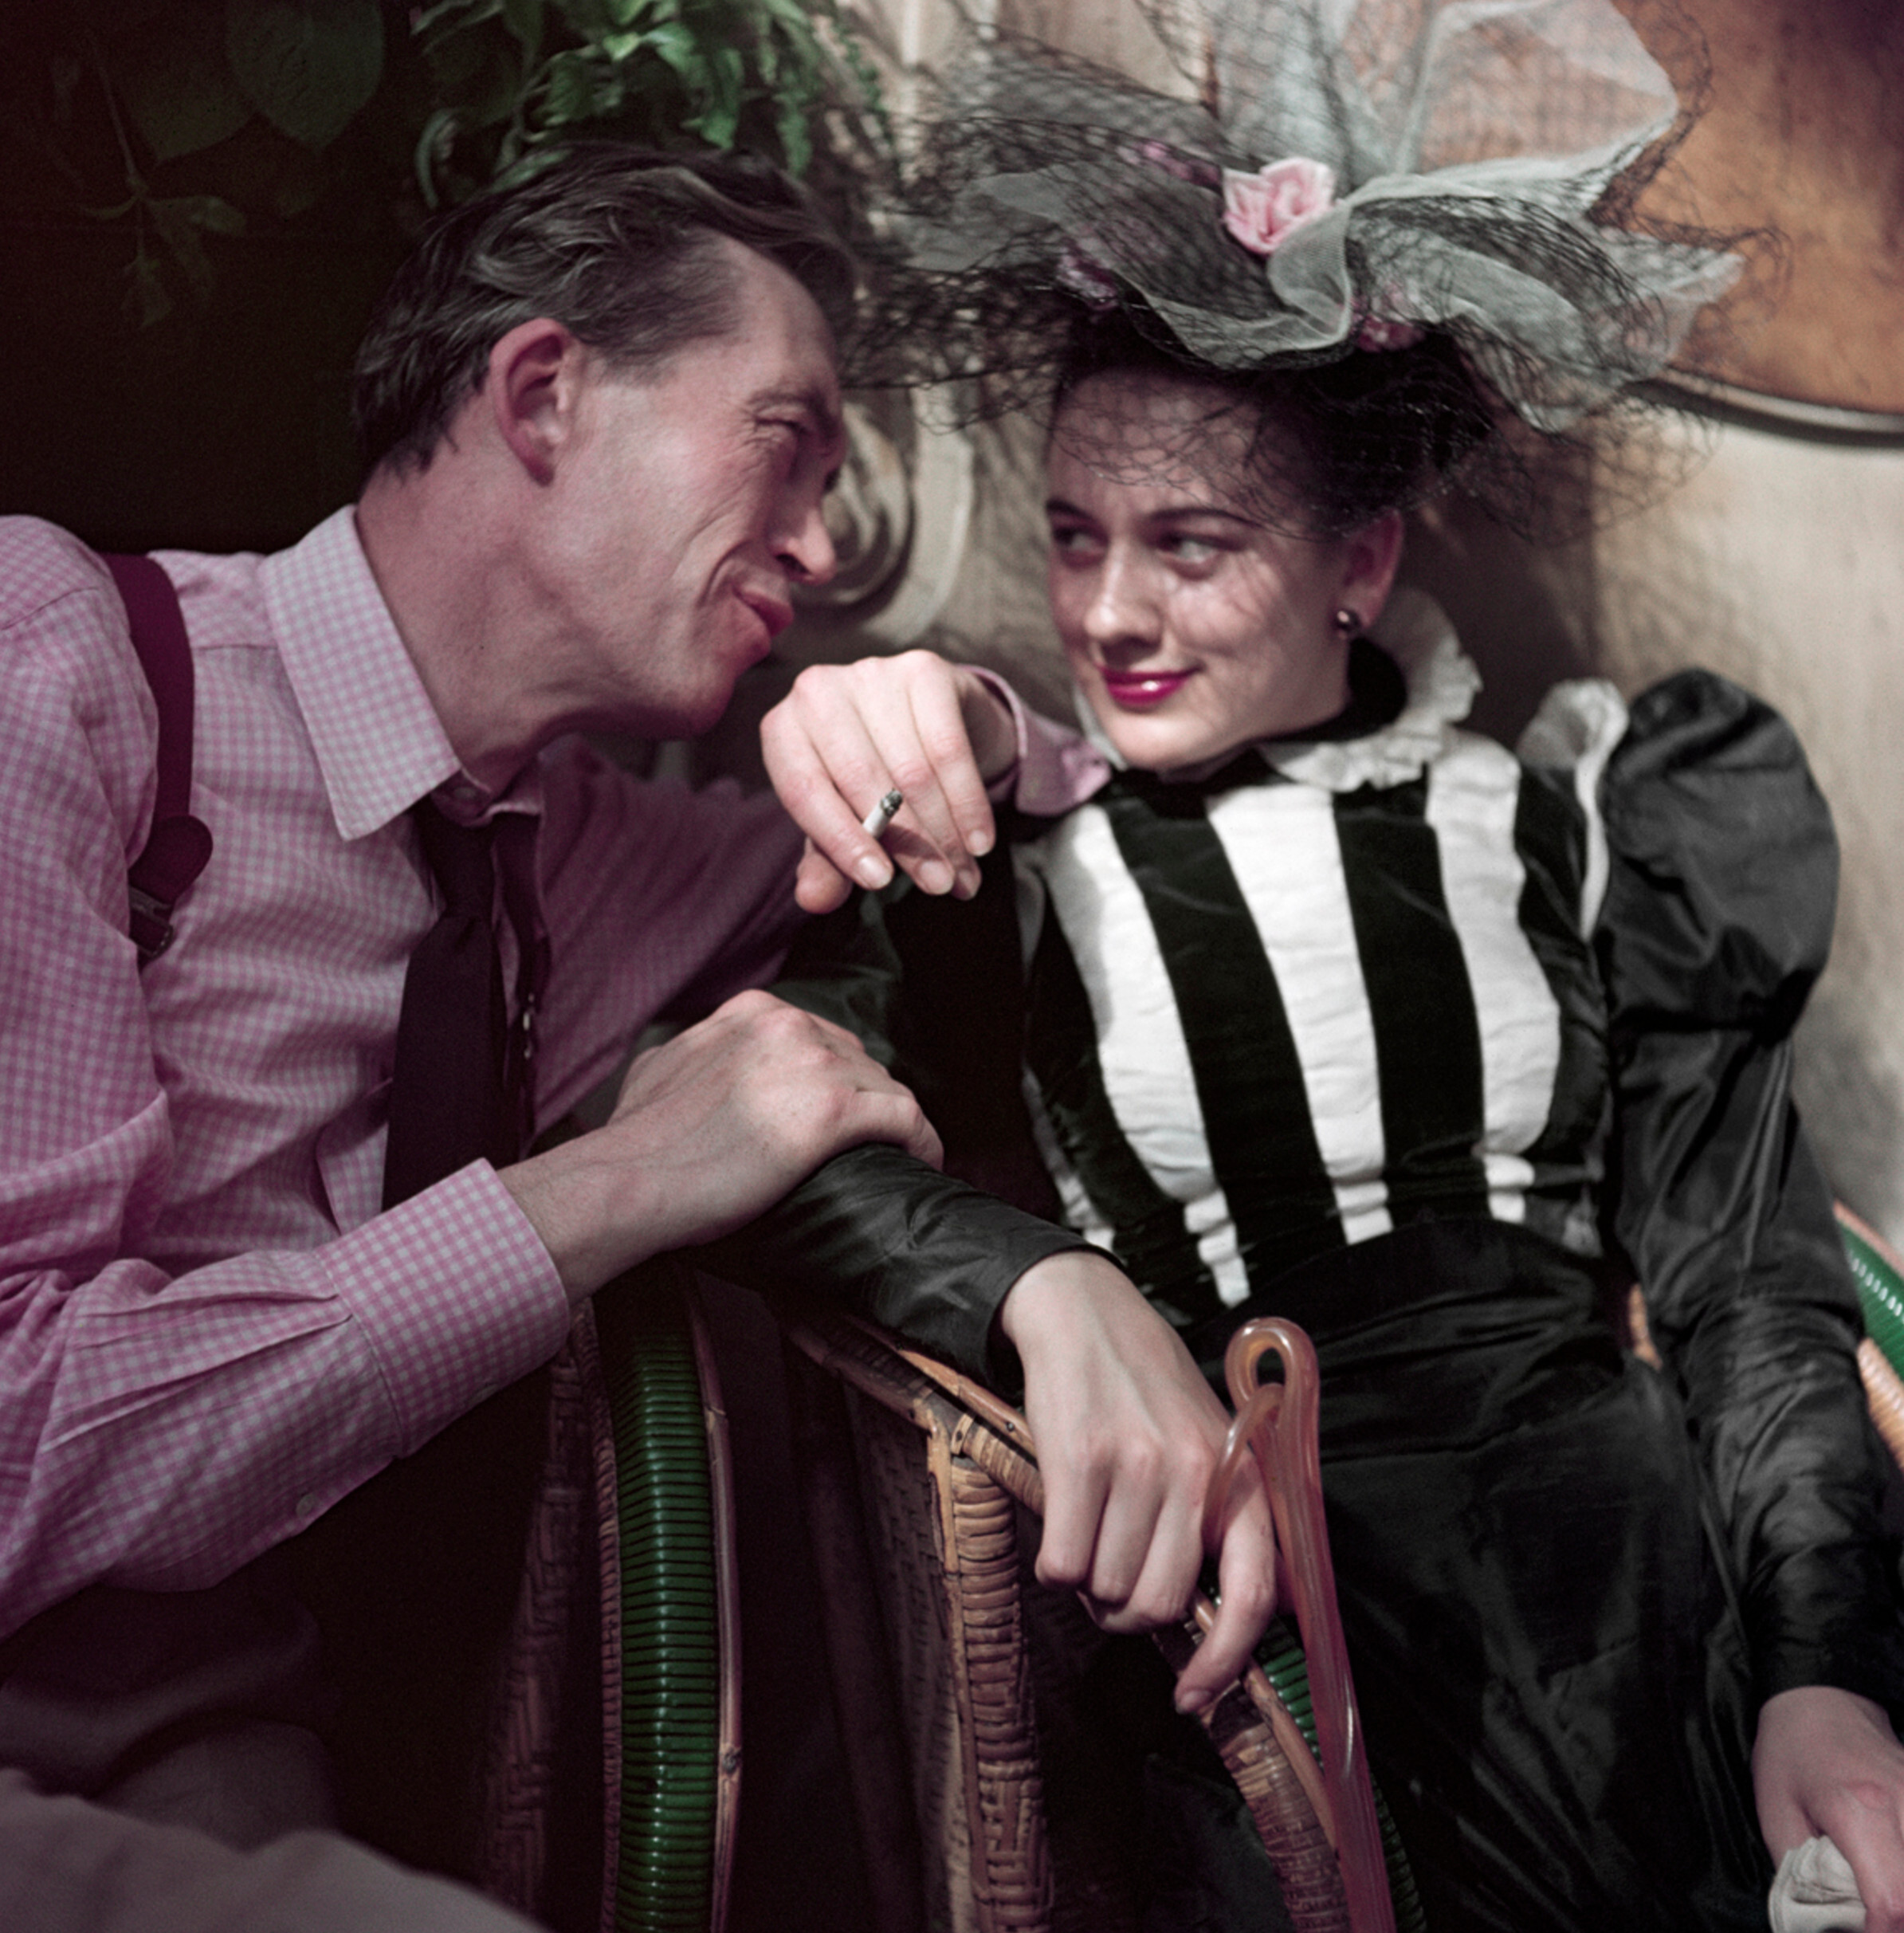 Джон Хьюстон в кафе Les Deux Magots во время съемок фильма Мулен Руж, Париж, 1952 год. Фотограф Роберт Капа